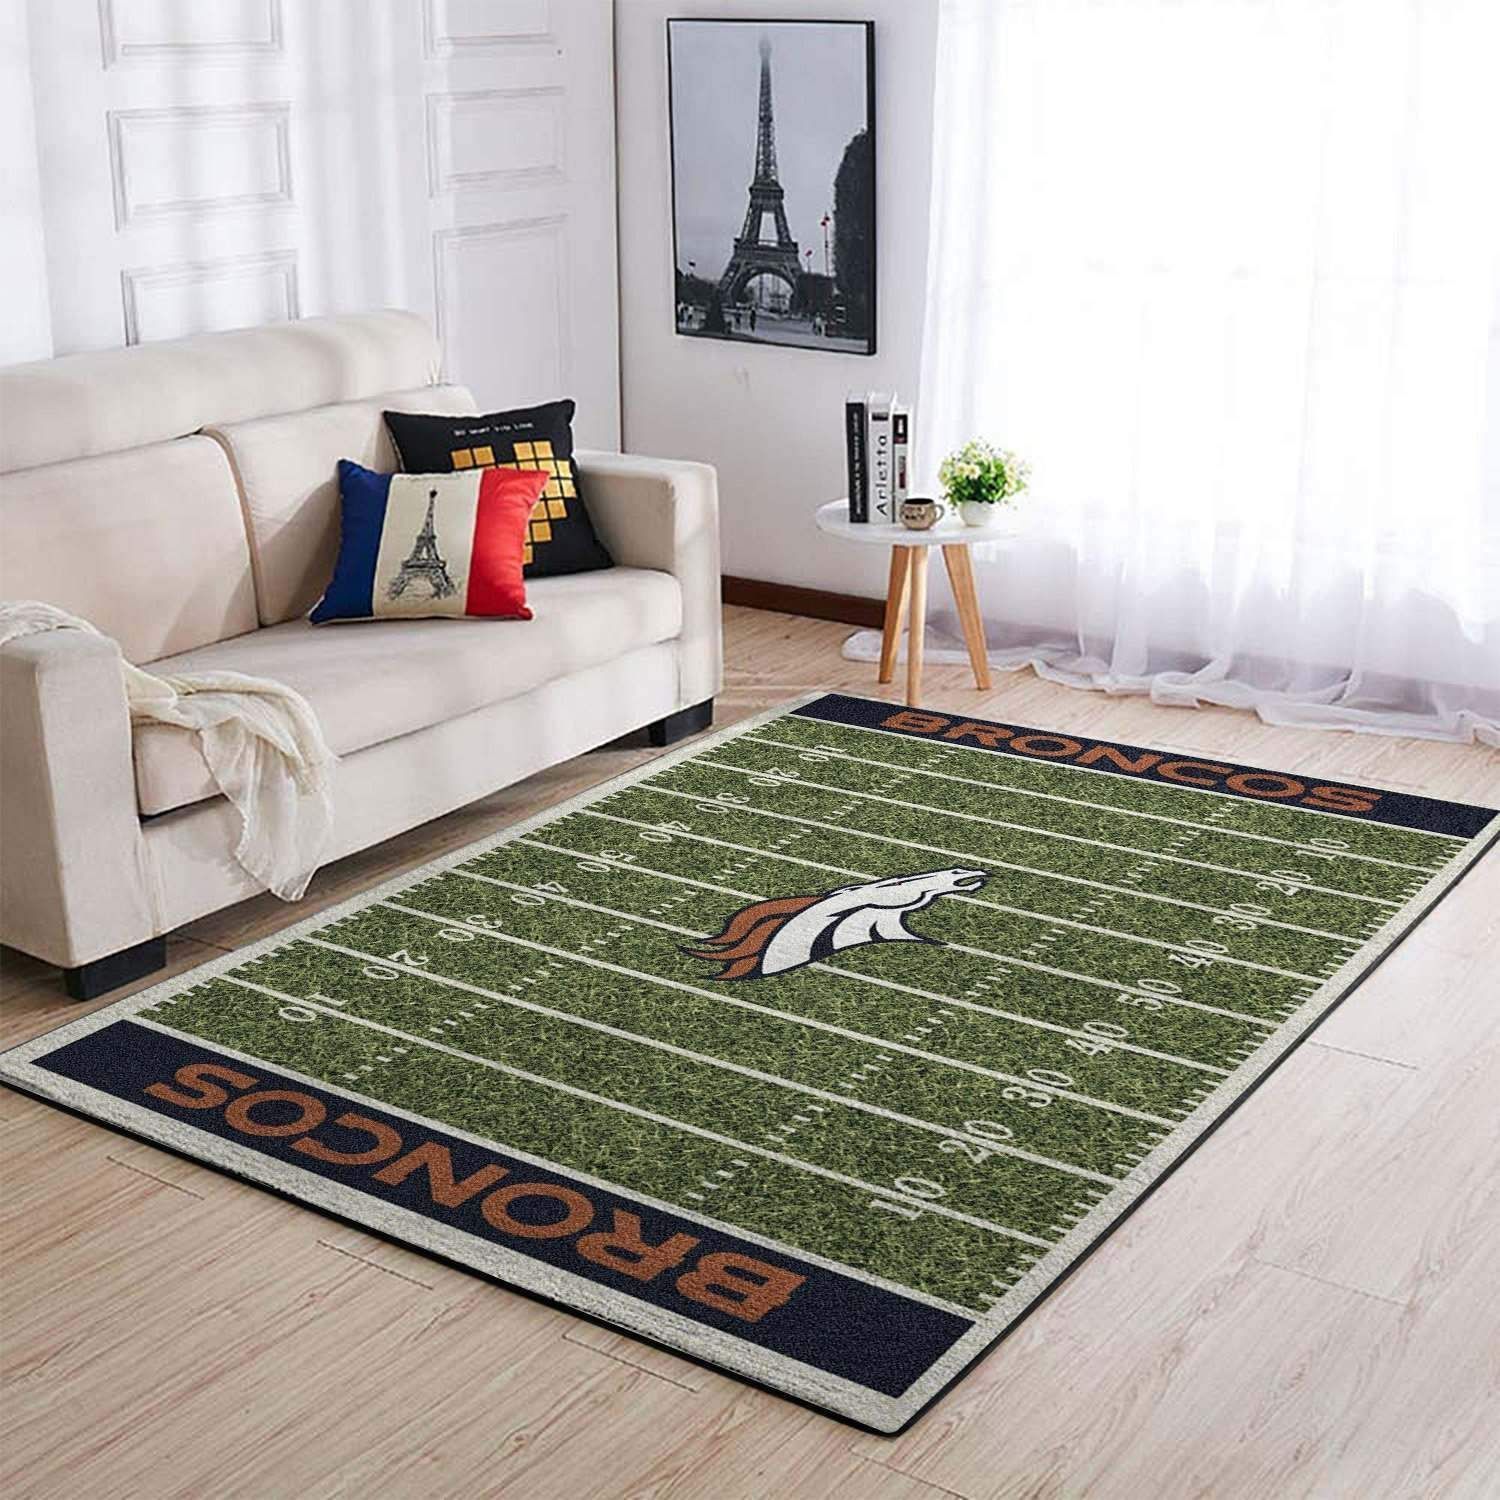 Nfl Football Team Denver Broncos Area Rug Home Decor - Indoor Outdoor Rugs